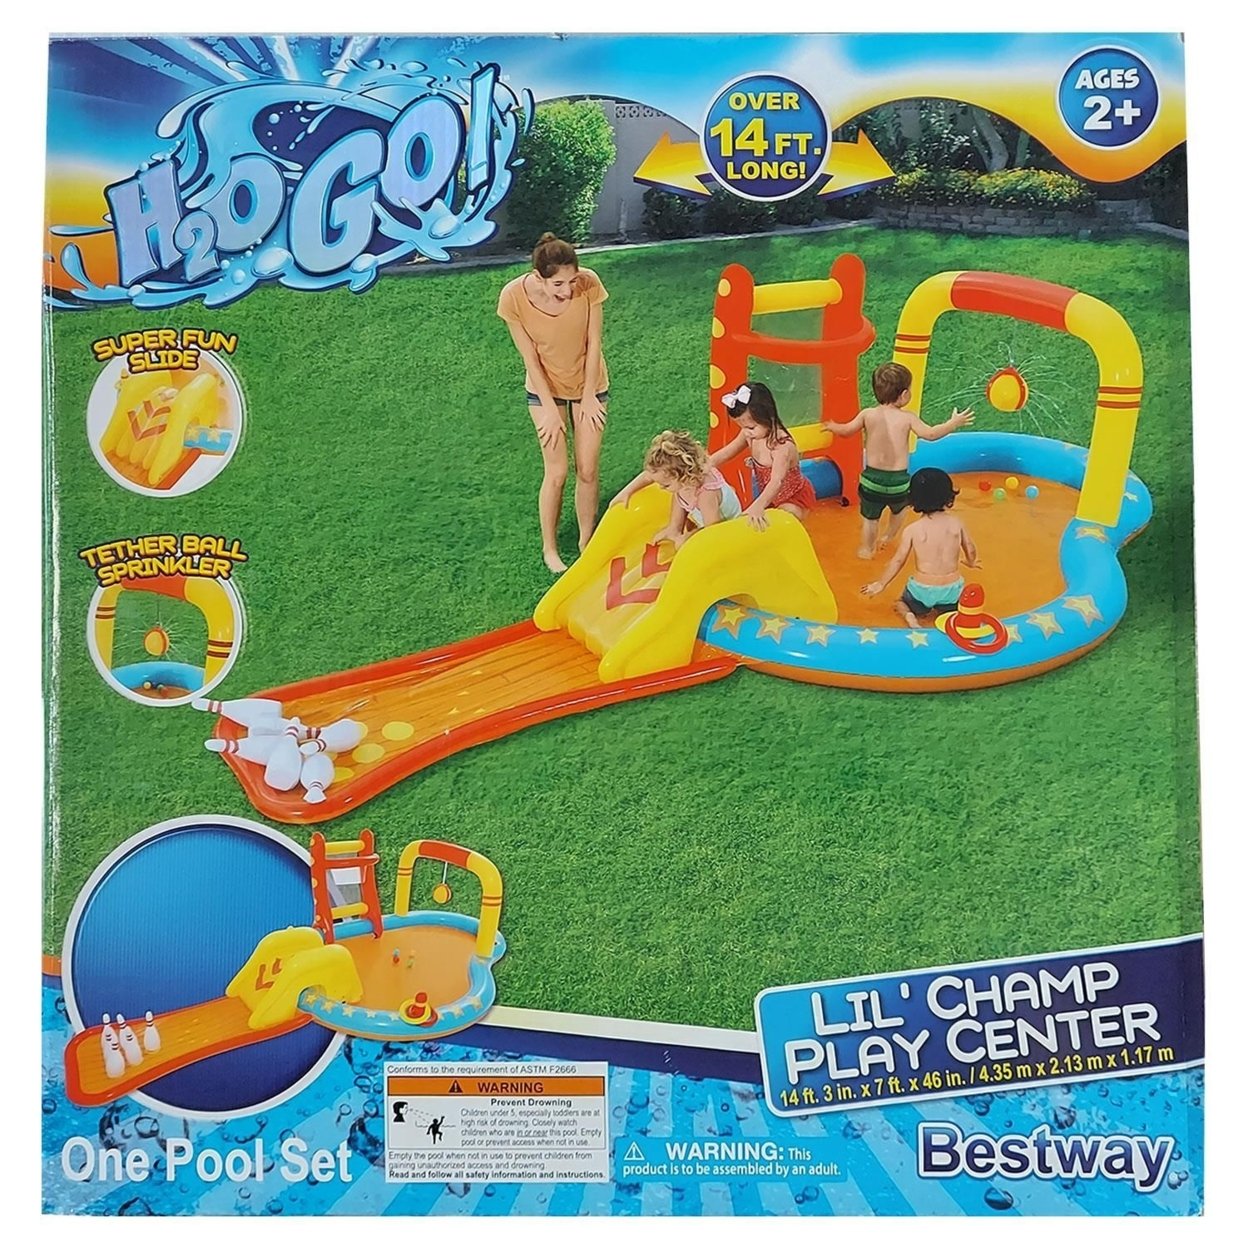 Kids Inflatable 14' Pool Lil Champ Play Center Slide Sprinkler Outdoor Fun Bestway